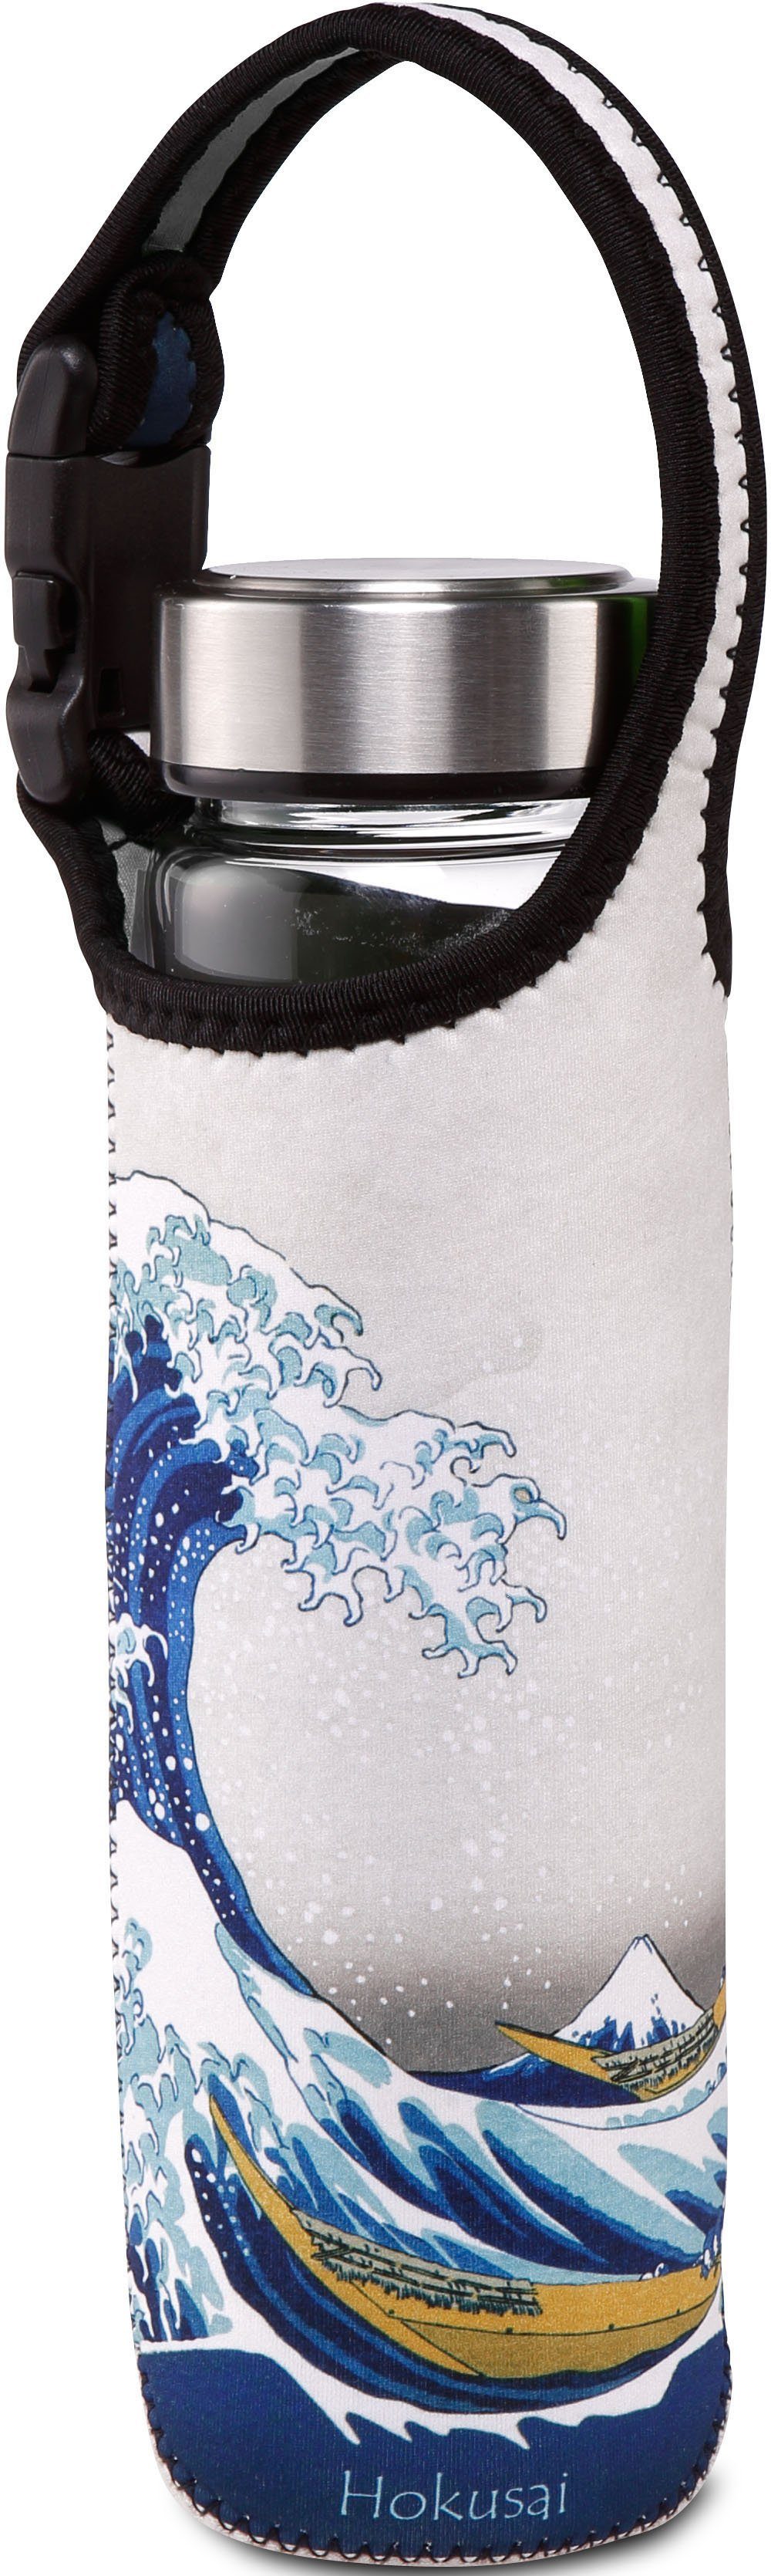 Katsushika Edelstahldeckel Trinkflasche in 700 ml Goebel Neoprenhülle, mit "Die bedruckter Hokusai Welle", - individuell